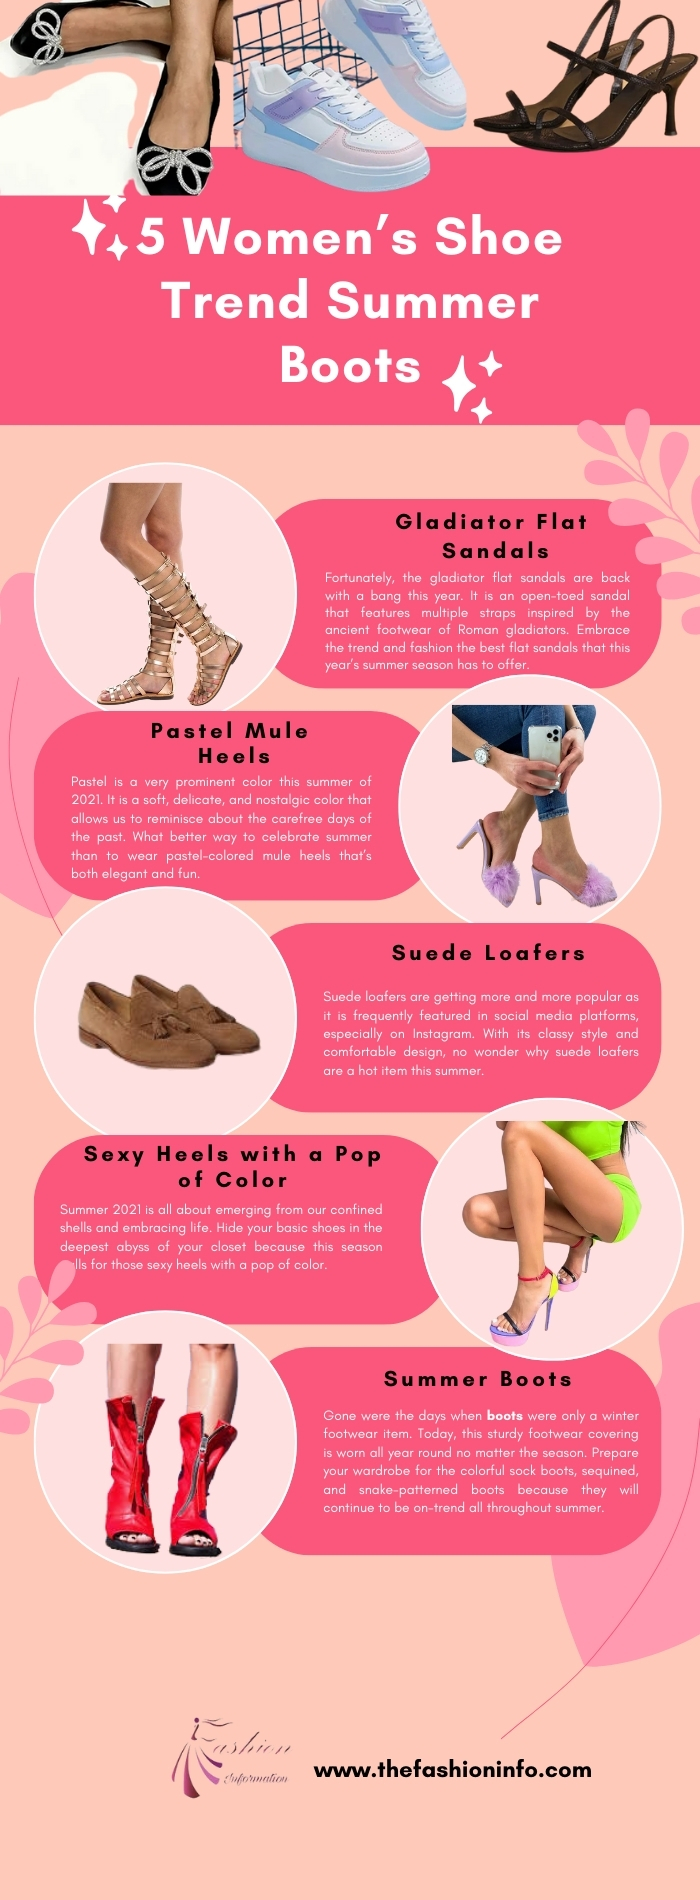 5 Women’s Shoe Trend Summer Boots